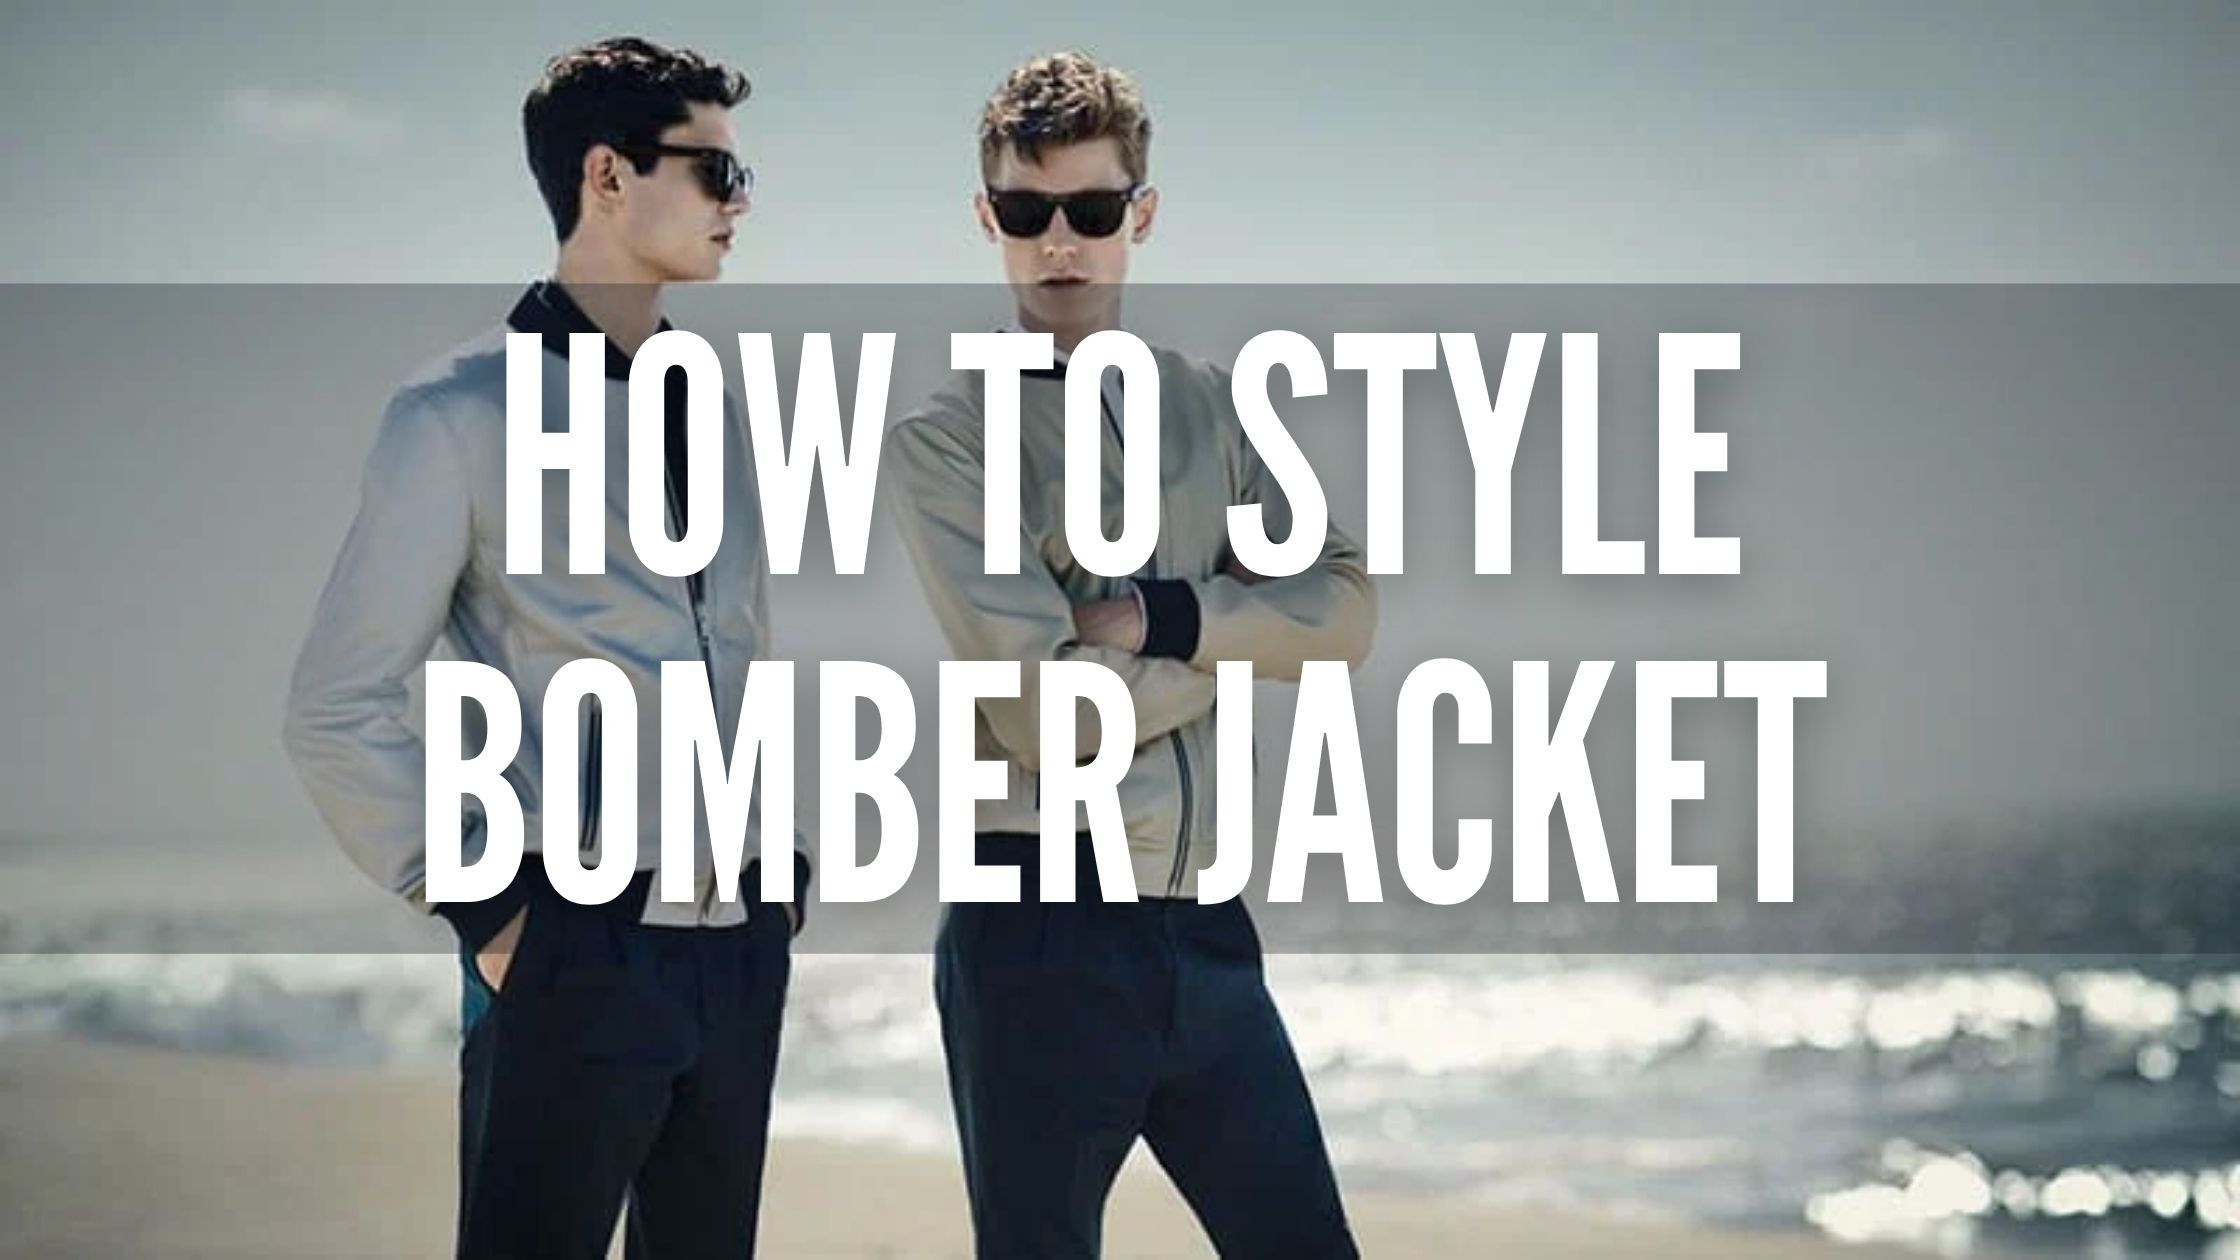 How to Style Bomber Jacket